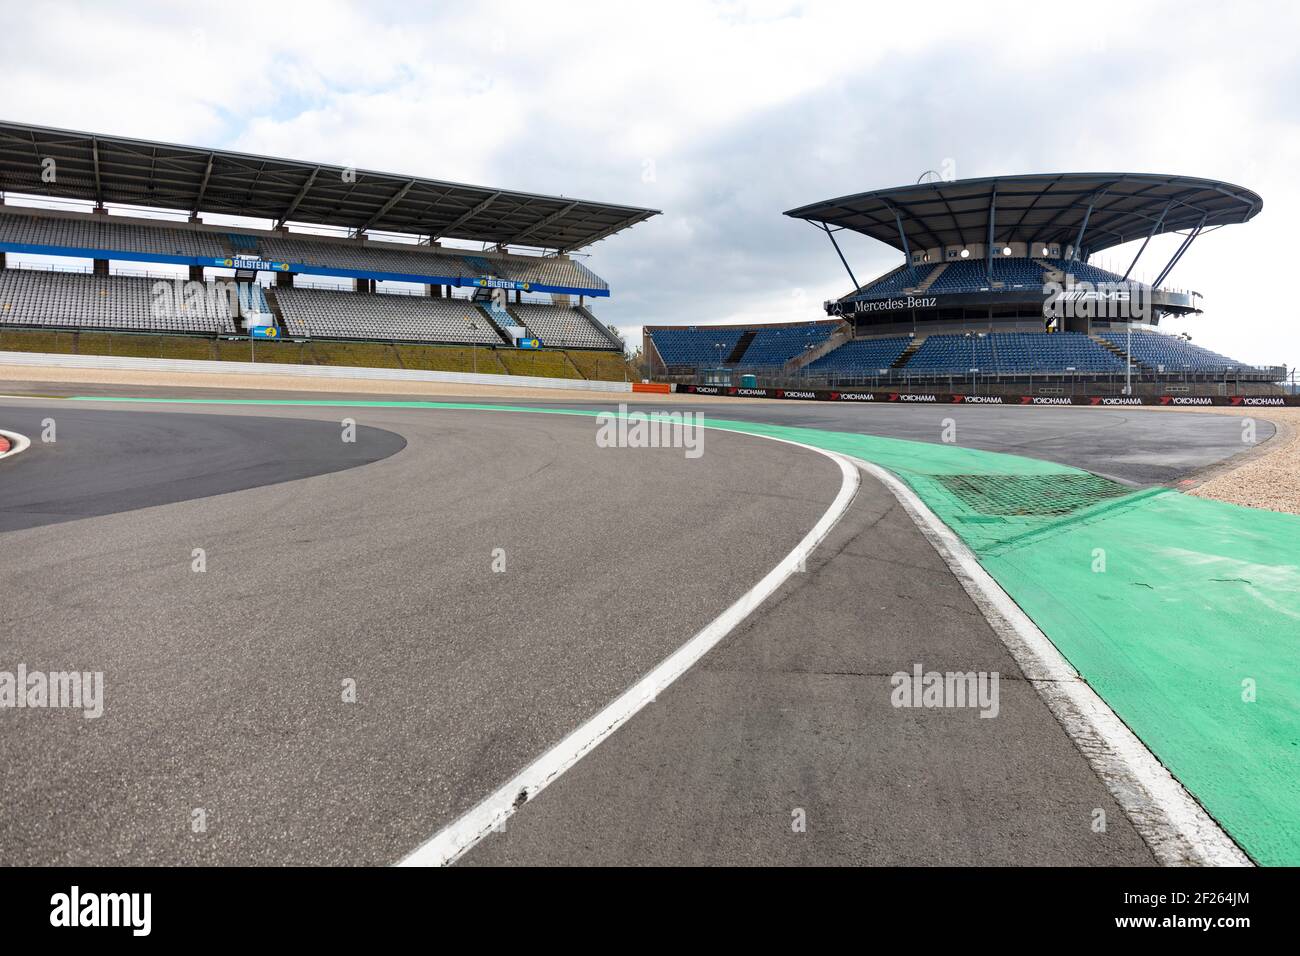 Nürburgring, empty seats, no races, no events Stock Photo